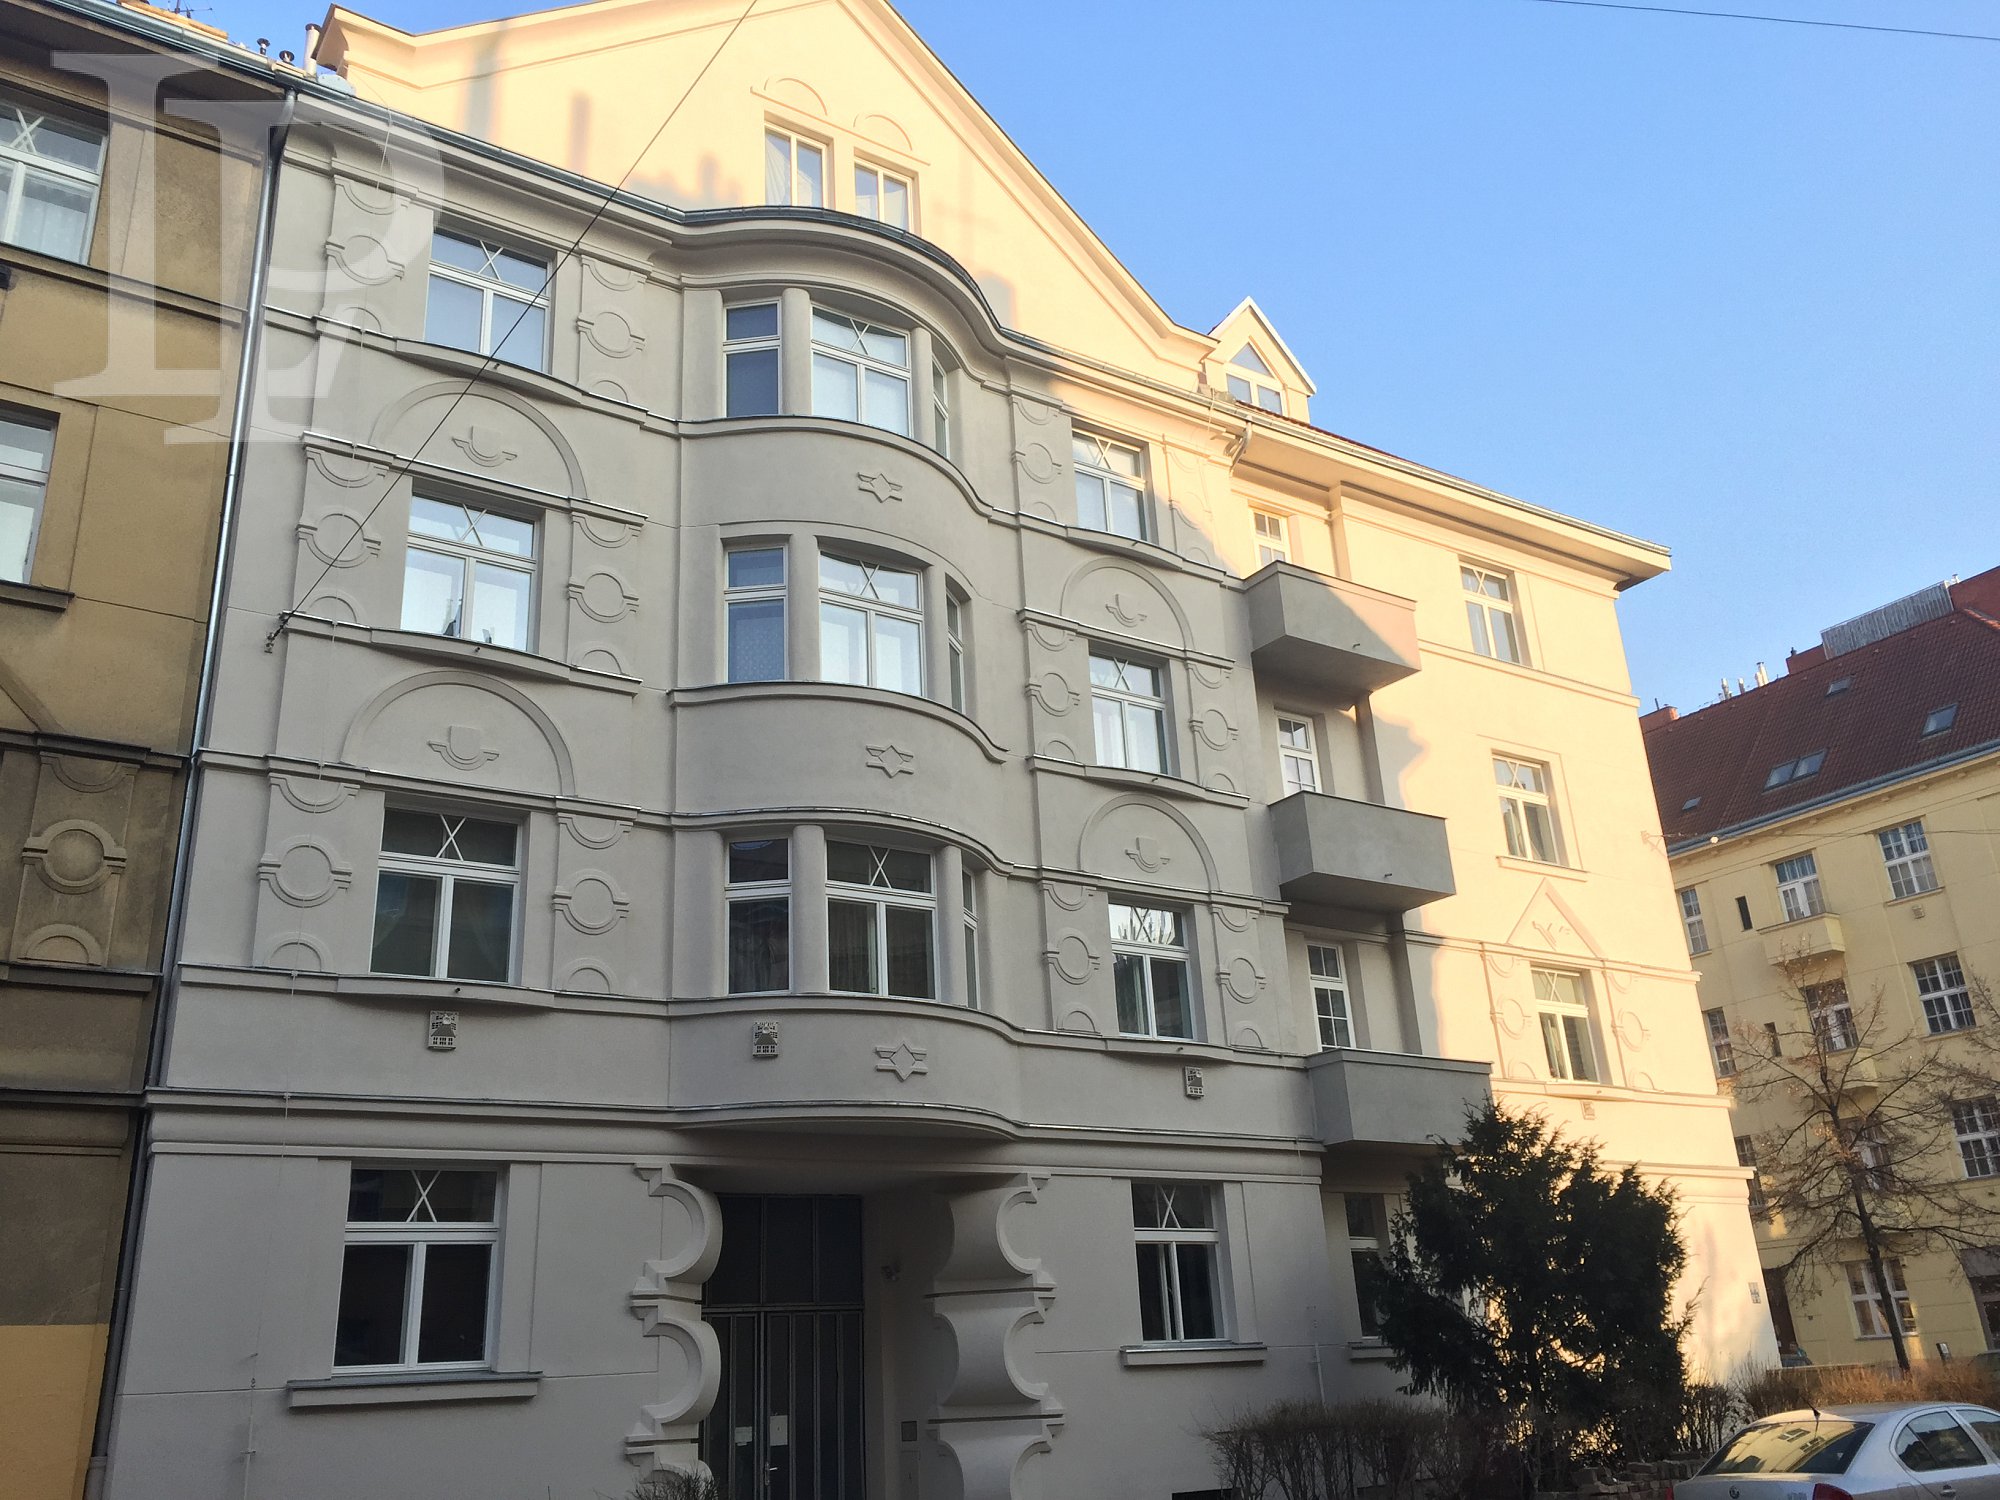 Luxusní byt, Praha 6 Bubeneč, 4+kk , 121 m2, v OV, cihla